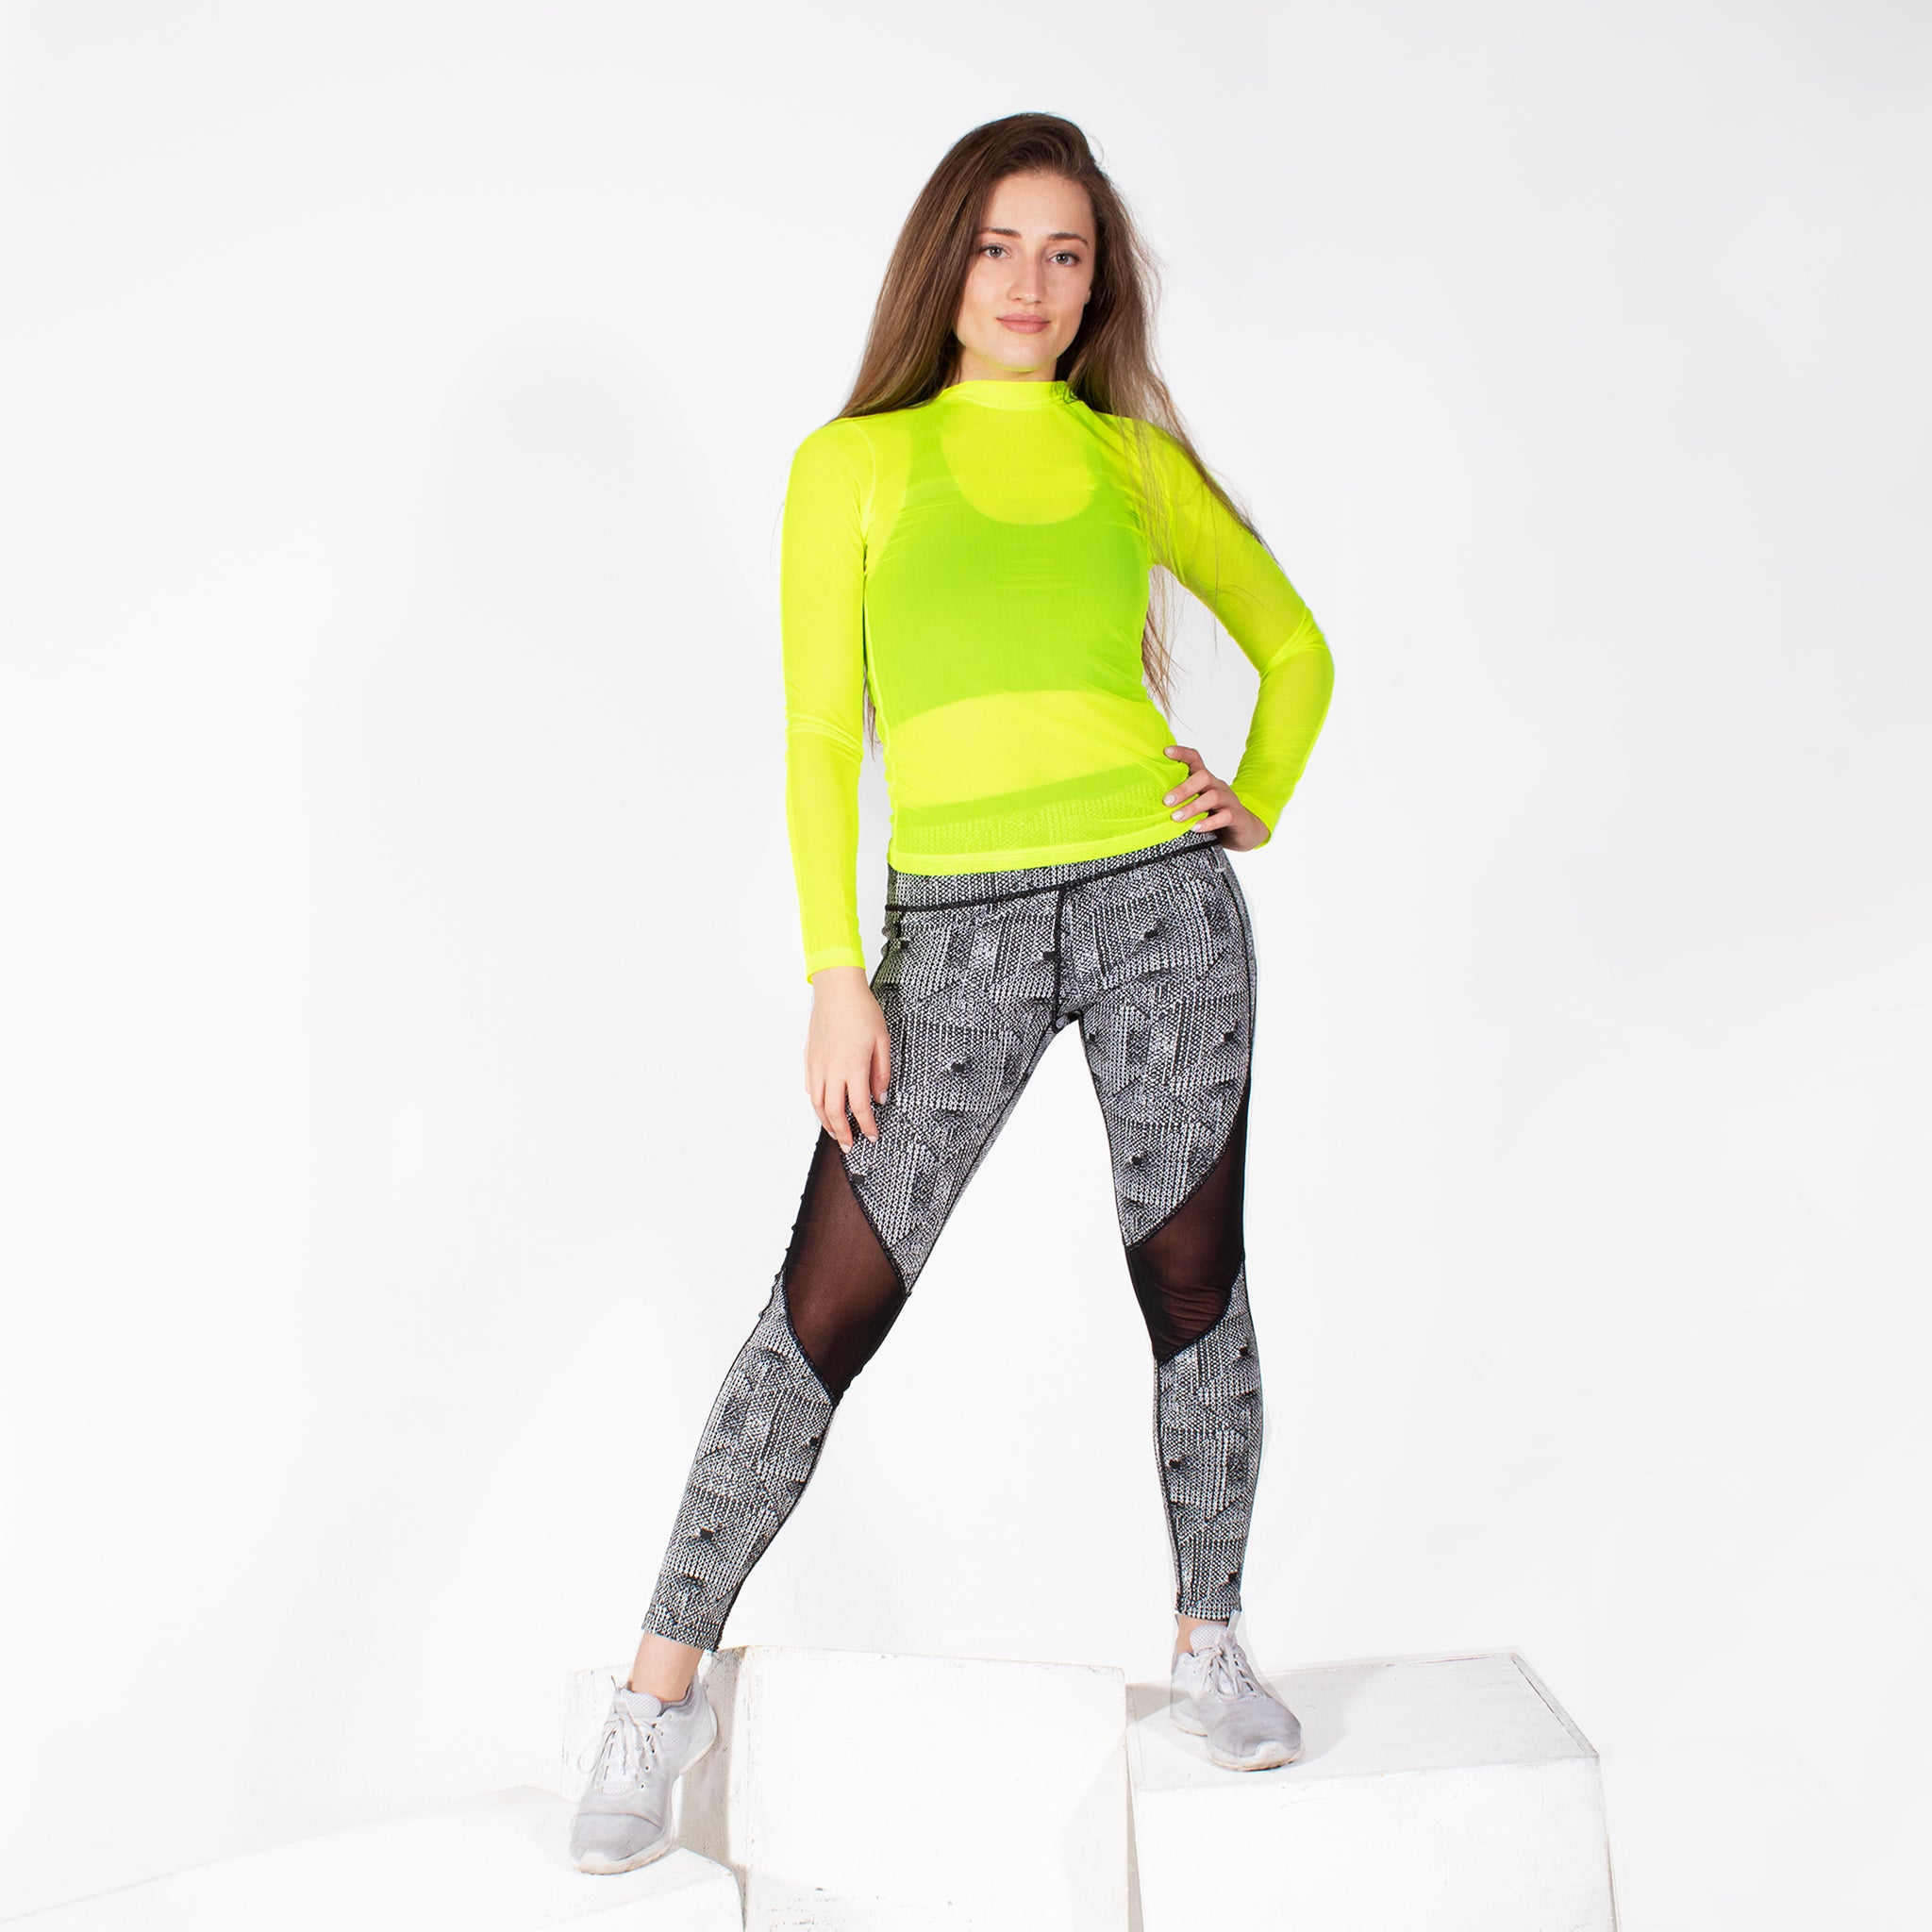 Enumerate Læs legeplads Patterned Digital Workout Leggings | Runner Island Activewear – Runner  Island®